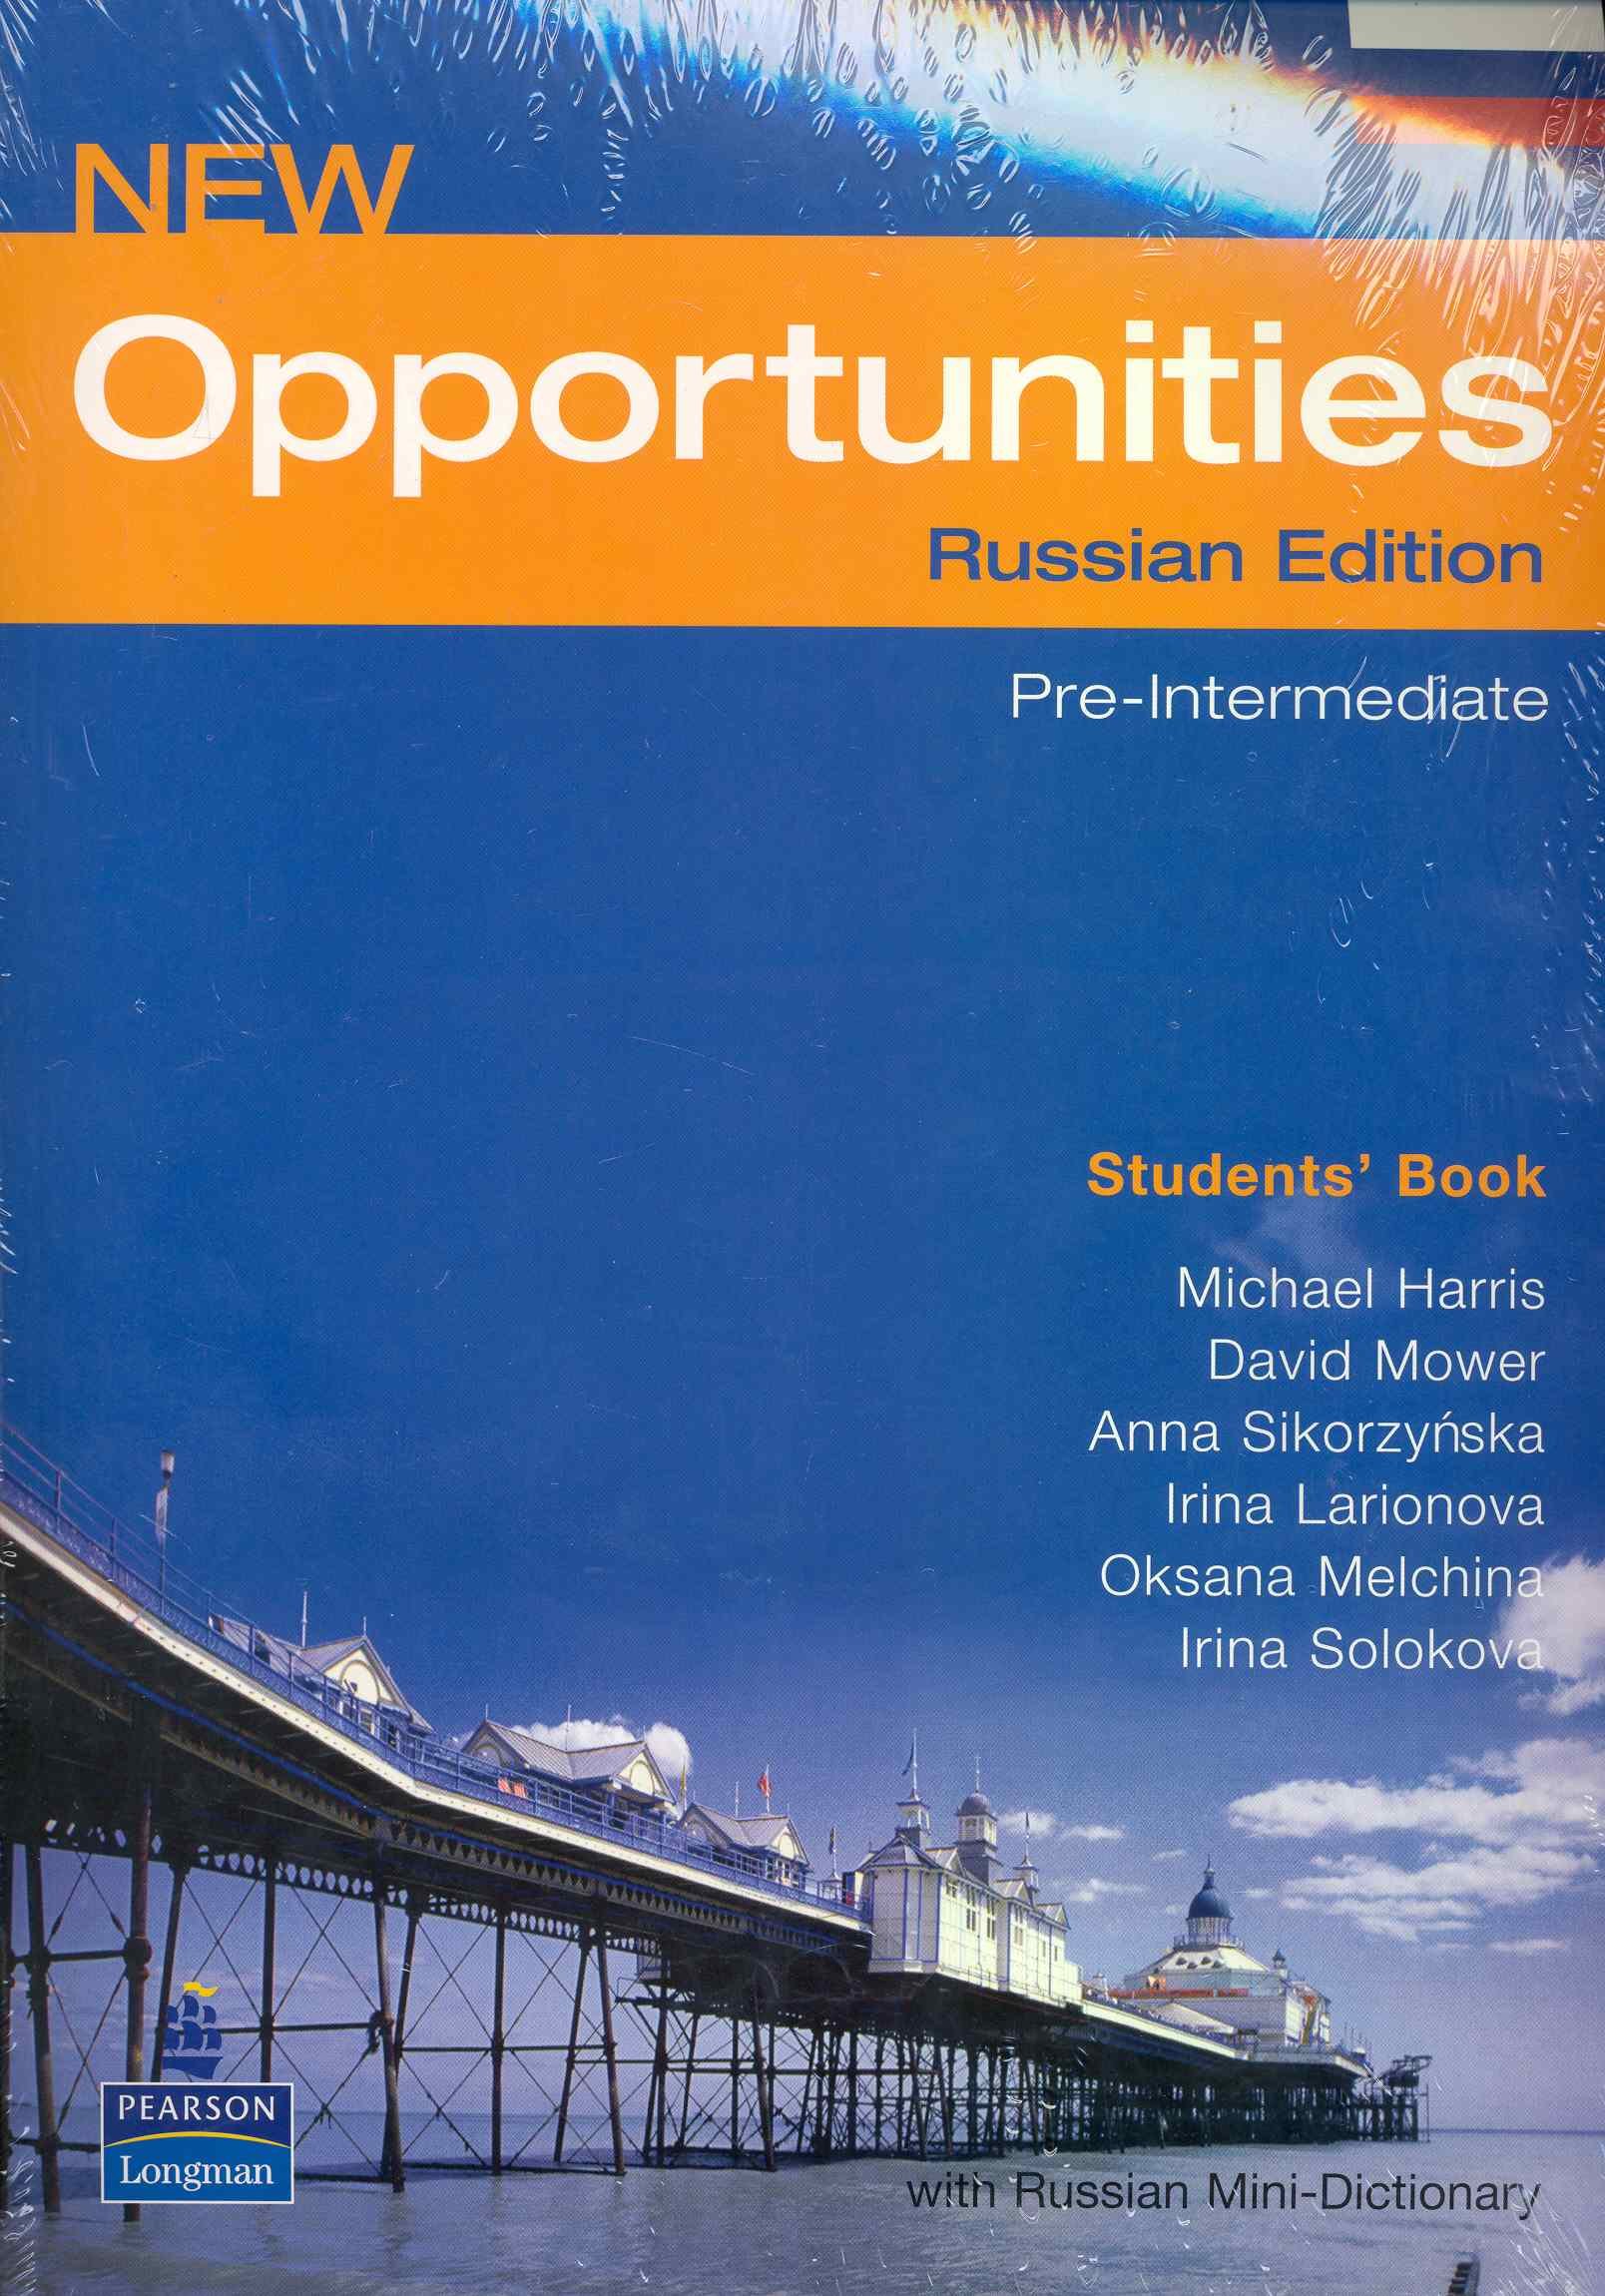 New Opportunities Pre-Intermediate Students  Book (+ Russian Mini-Dictionary) (). Harris M., Mower D. ()